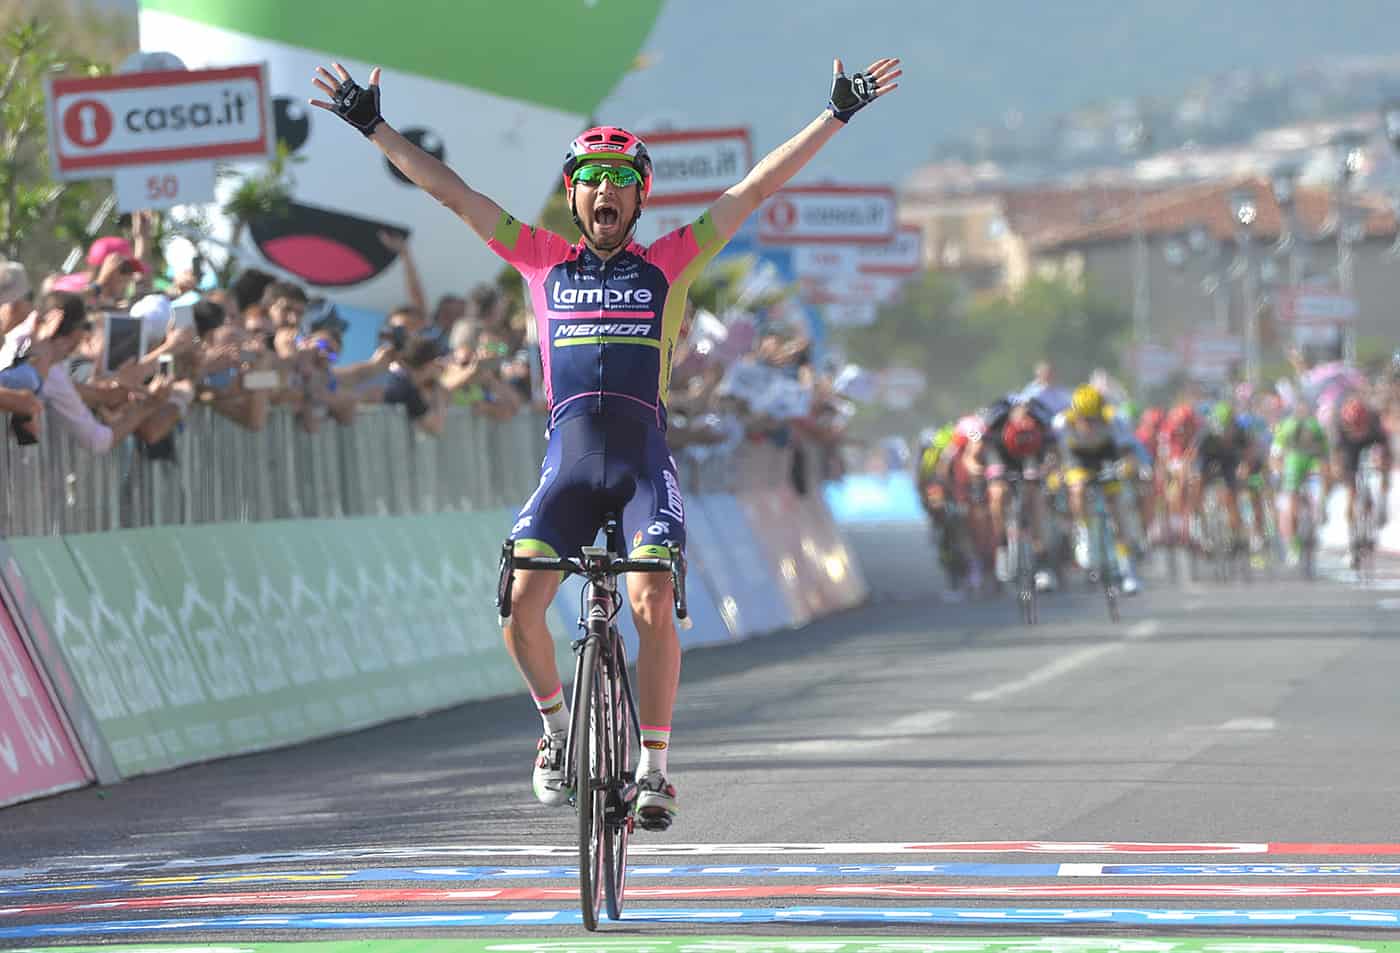 Diego Ulisssi of Lampre Merida win the fourth stage of the Giro d'Italia 2016, from Catanzaro to Praia a Mare (CS) km 200, in Praia a Mare (CS), Italy, 10 May 2016 ANSA/LUCA ZENNARO